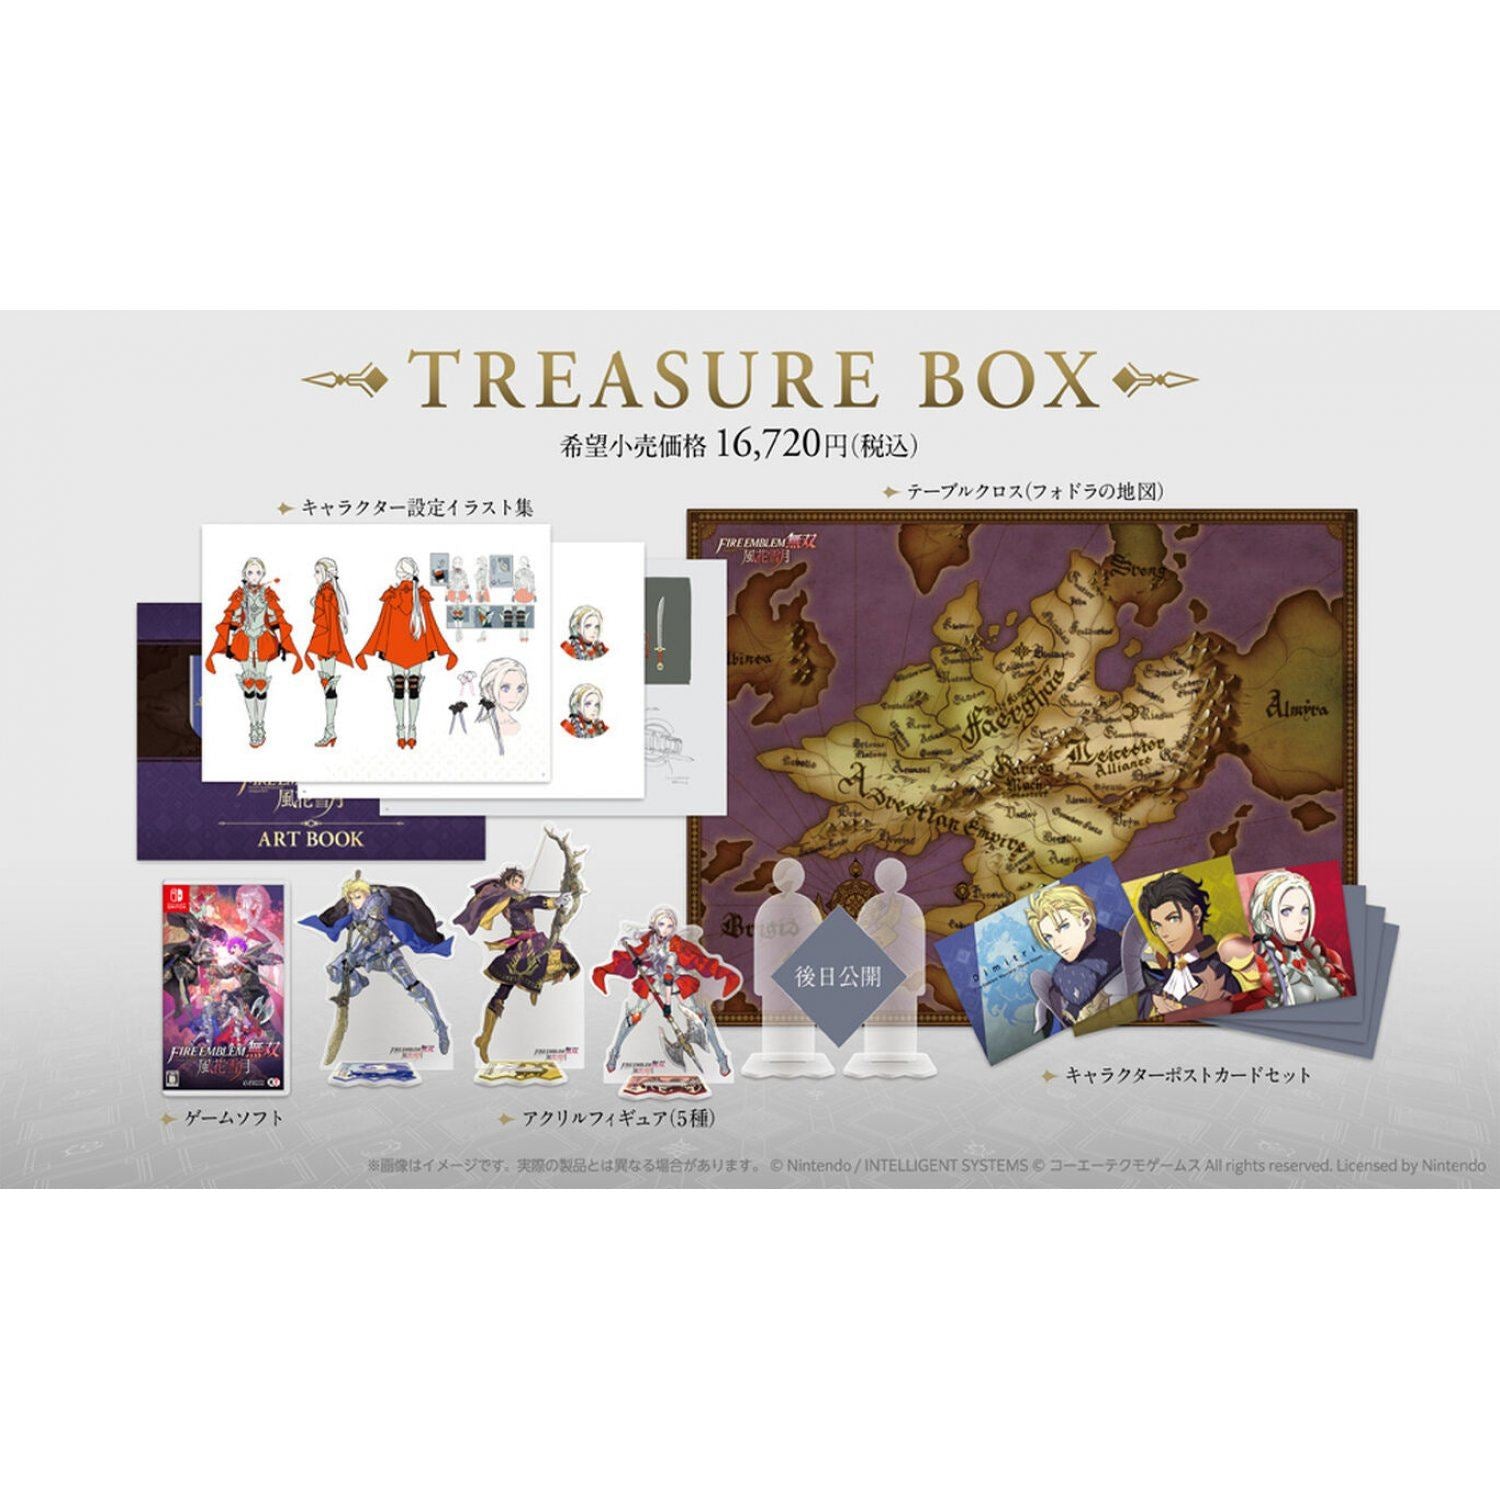 Fire Emblem Warriors: Three Hopes - Treasure Box Limited Edition - (NSW) Nintendo Switch (Japanese Import) Video Games Nintendo   